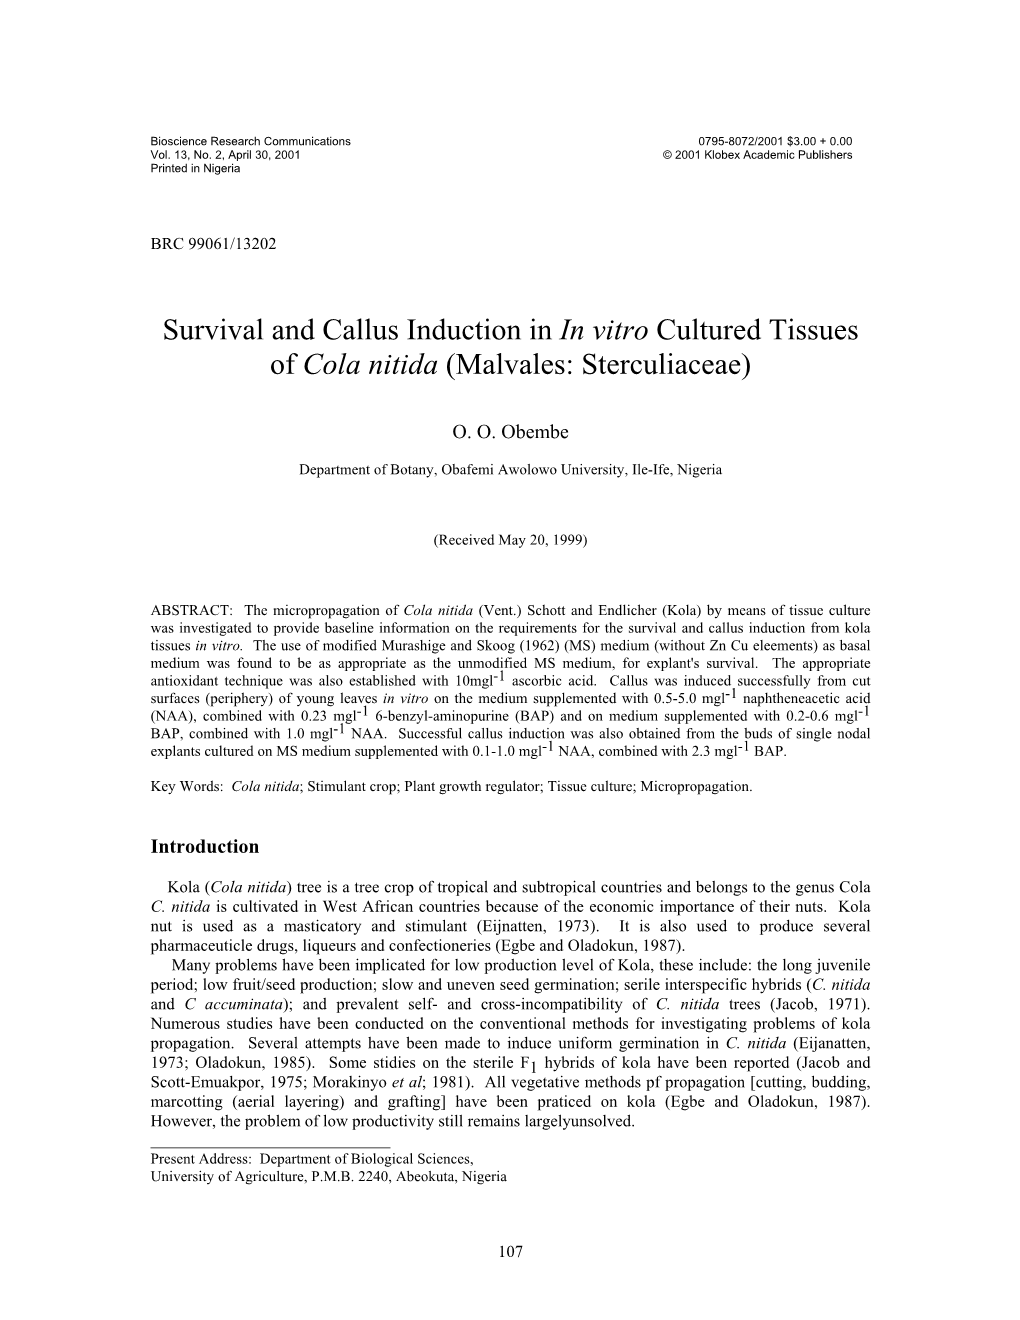 Survival and Callus Induction in in Vitro Cultured Tissues of Cola Nitida (Malvales: Sterculiaceae)